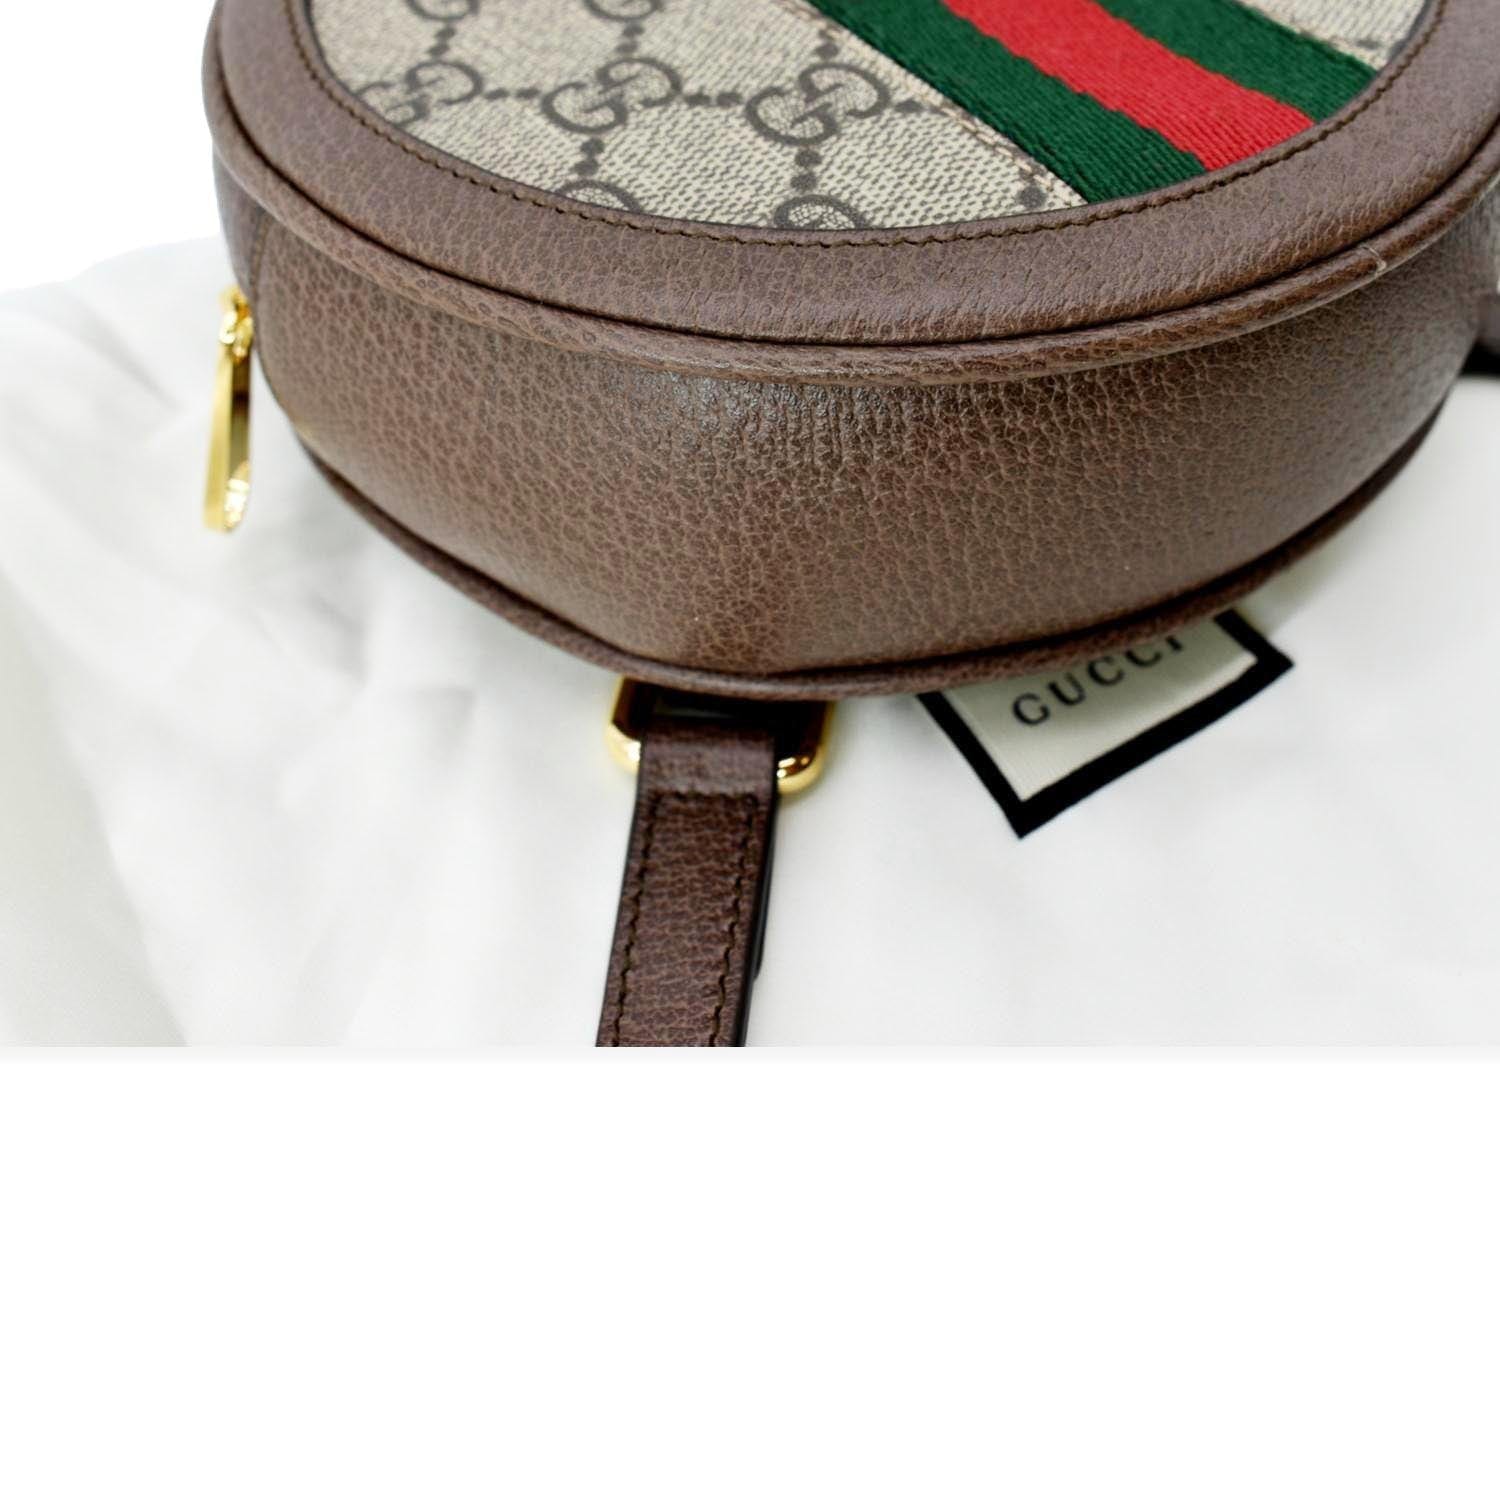 Gucci: Beige & Brown GG Supreme Backpack